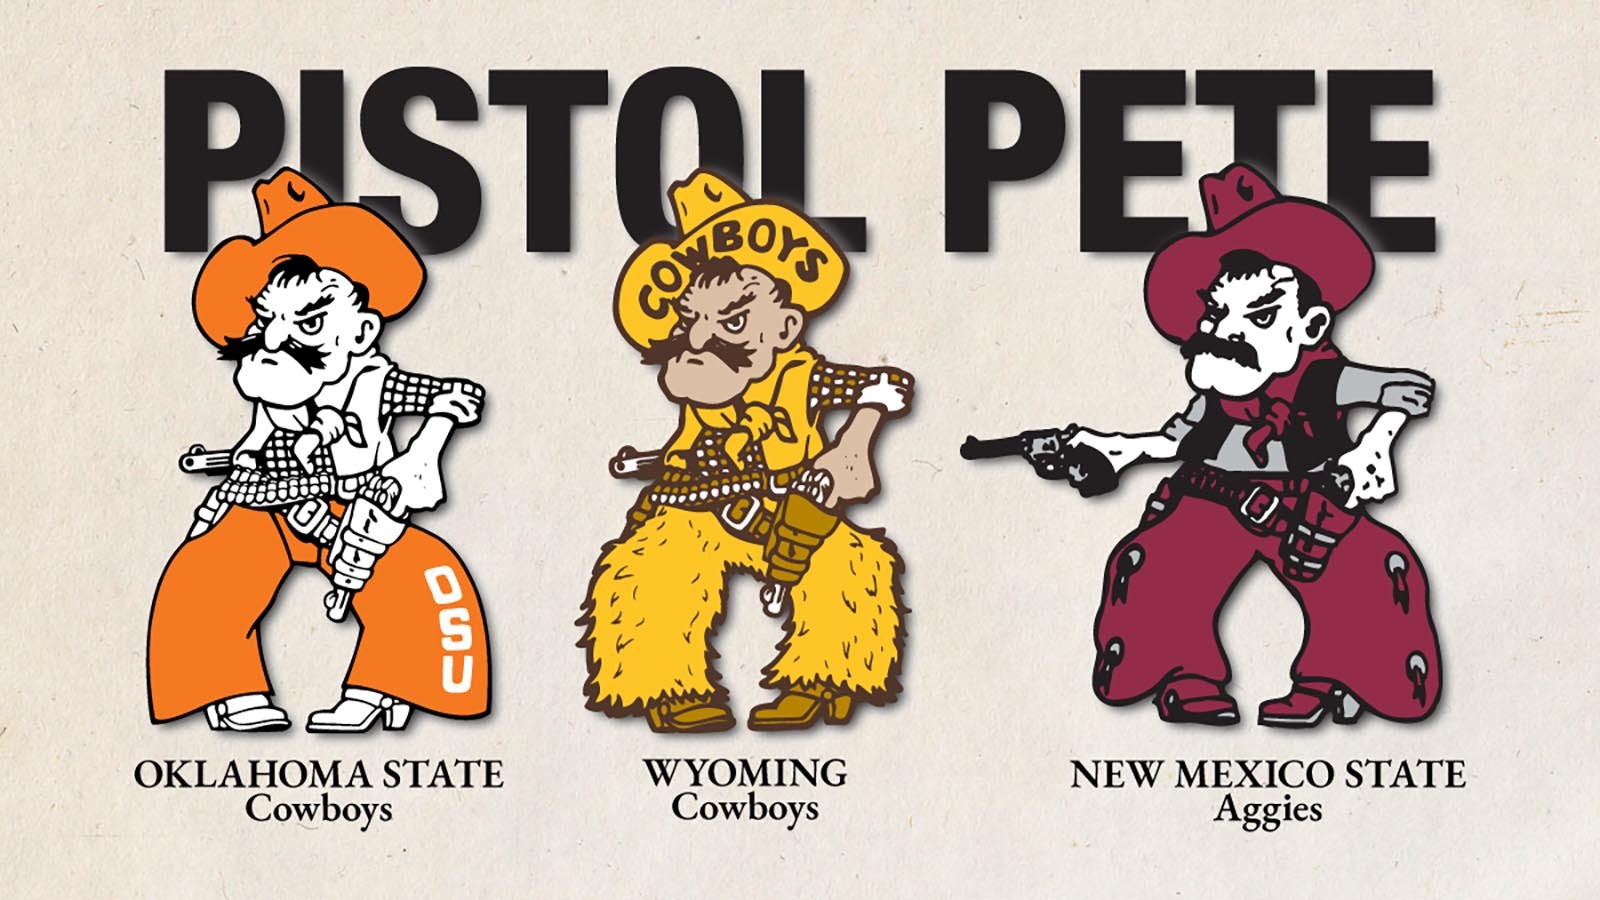 Pistol Pete, OSU, Oklahoma State